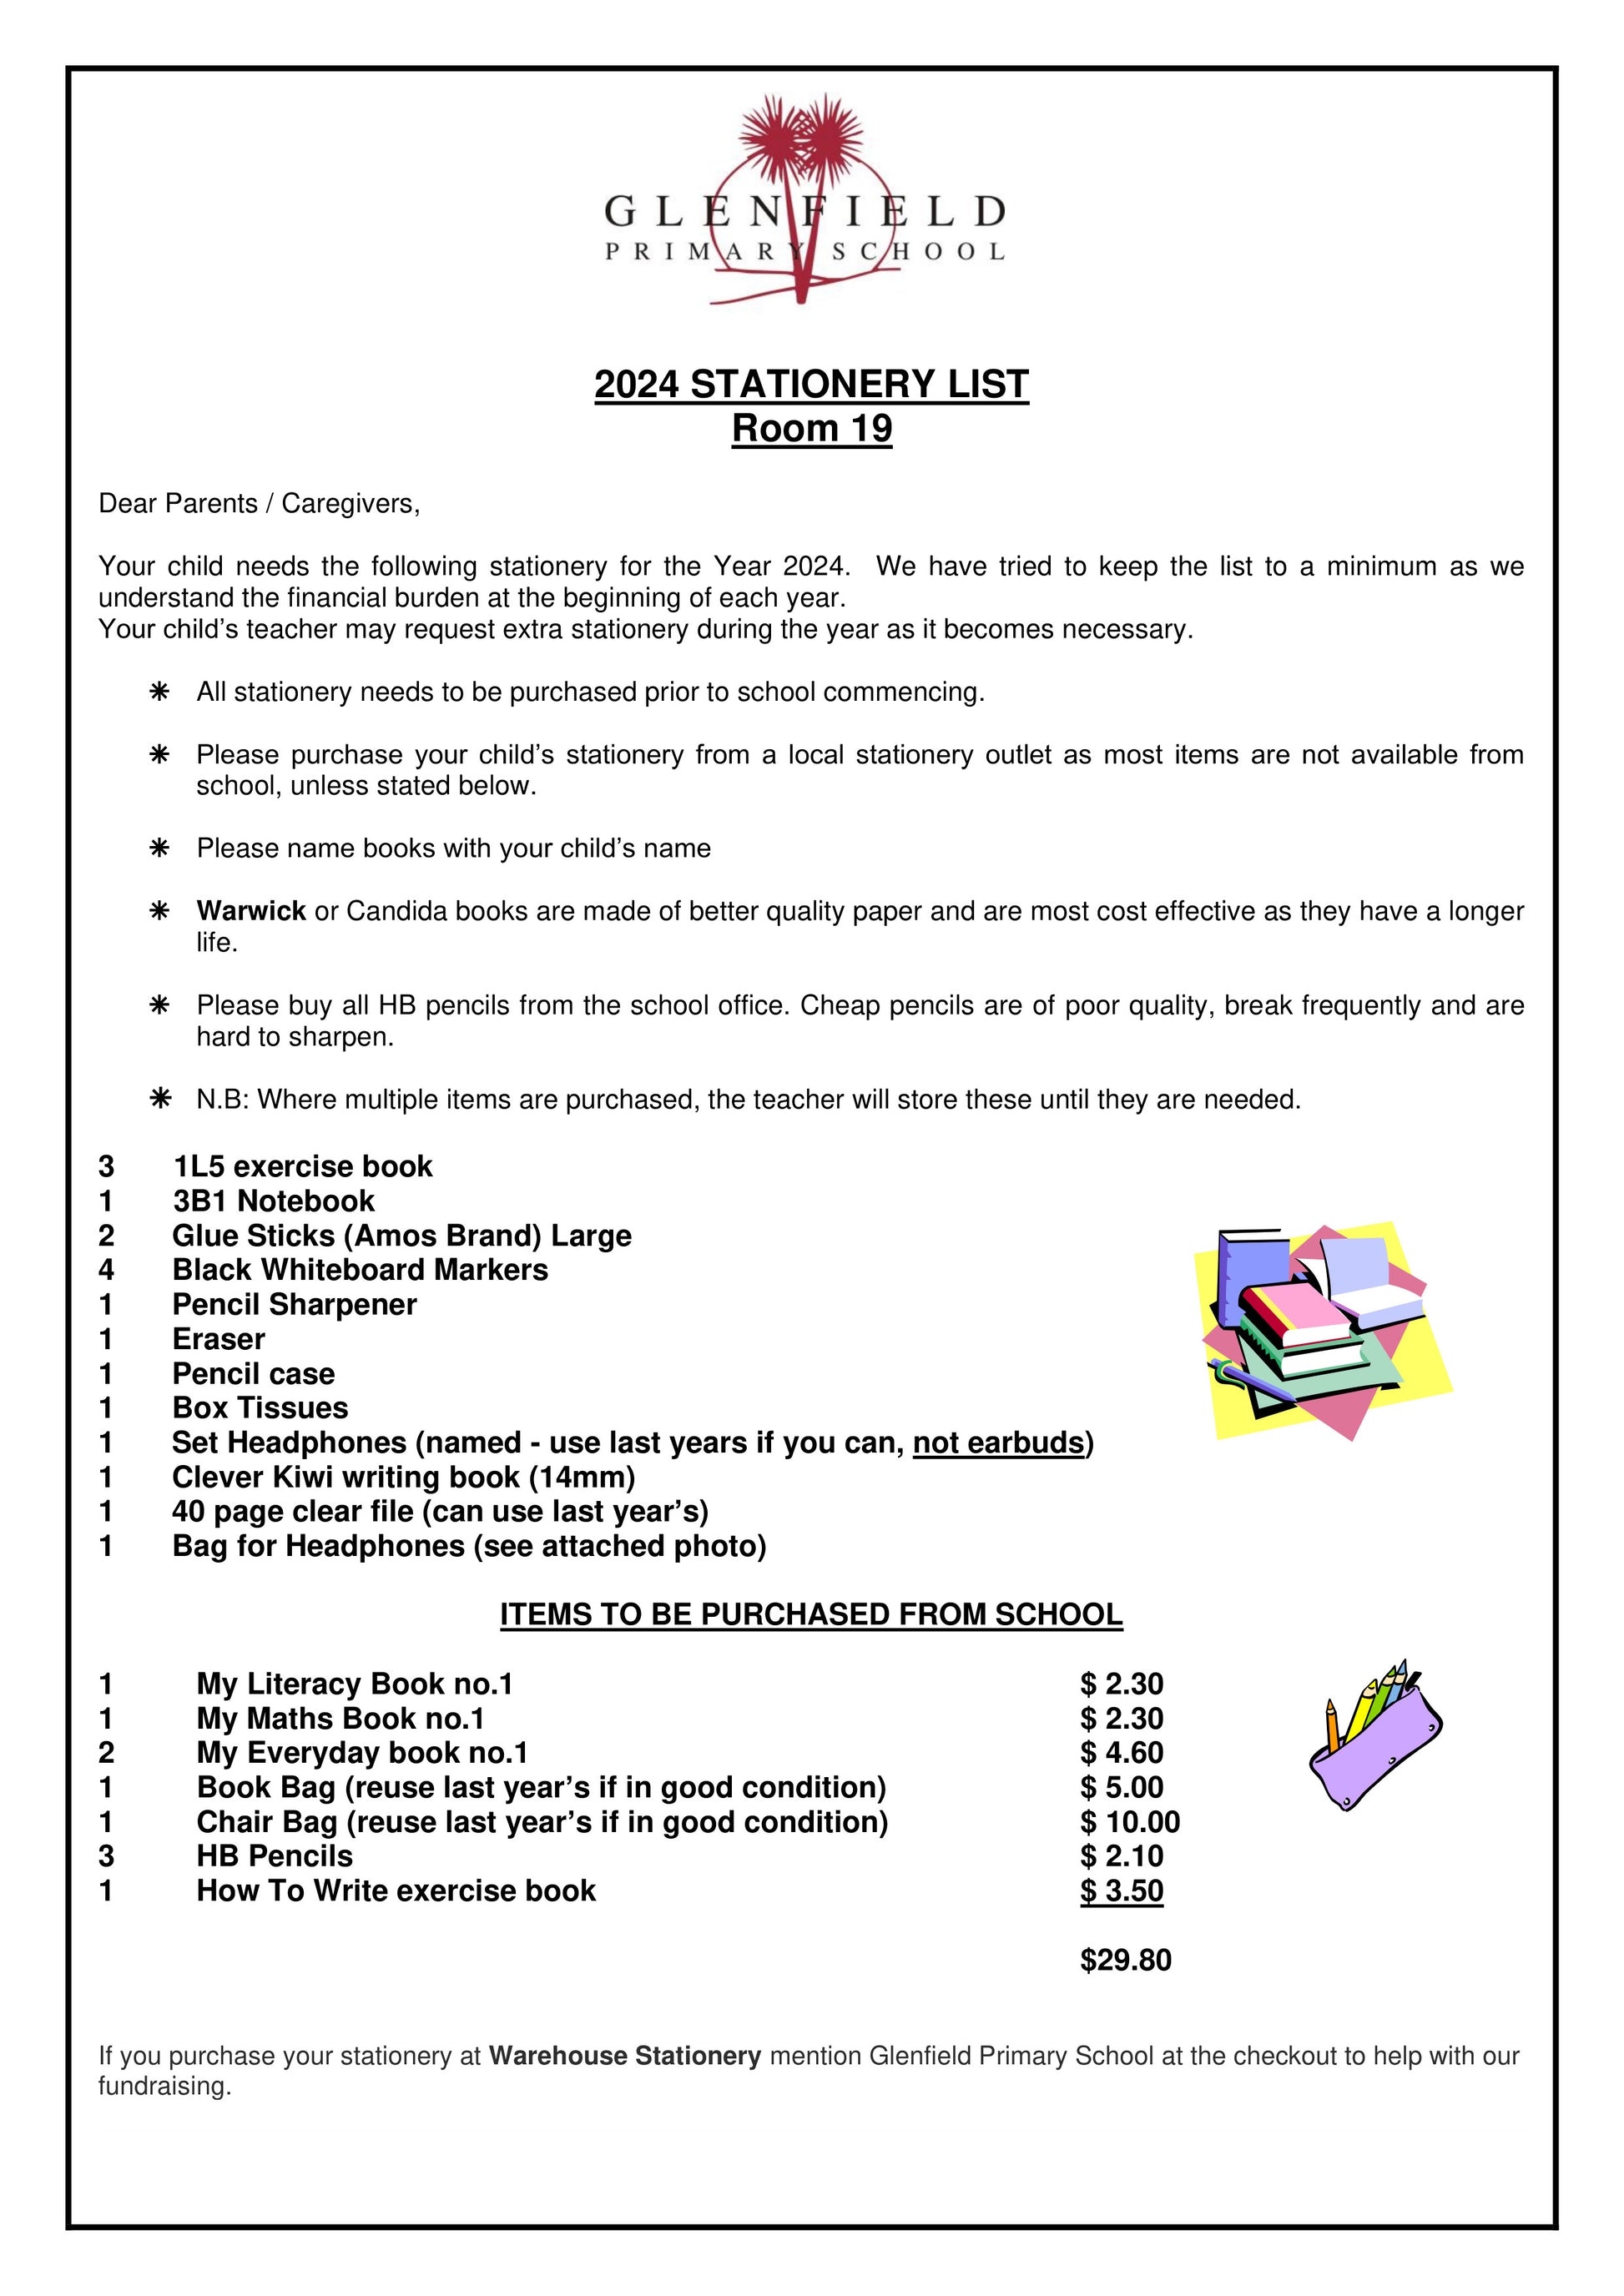 Glenfield Primary School Stationery List 2024 Room 19